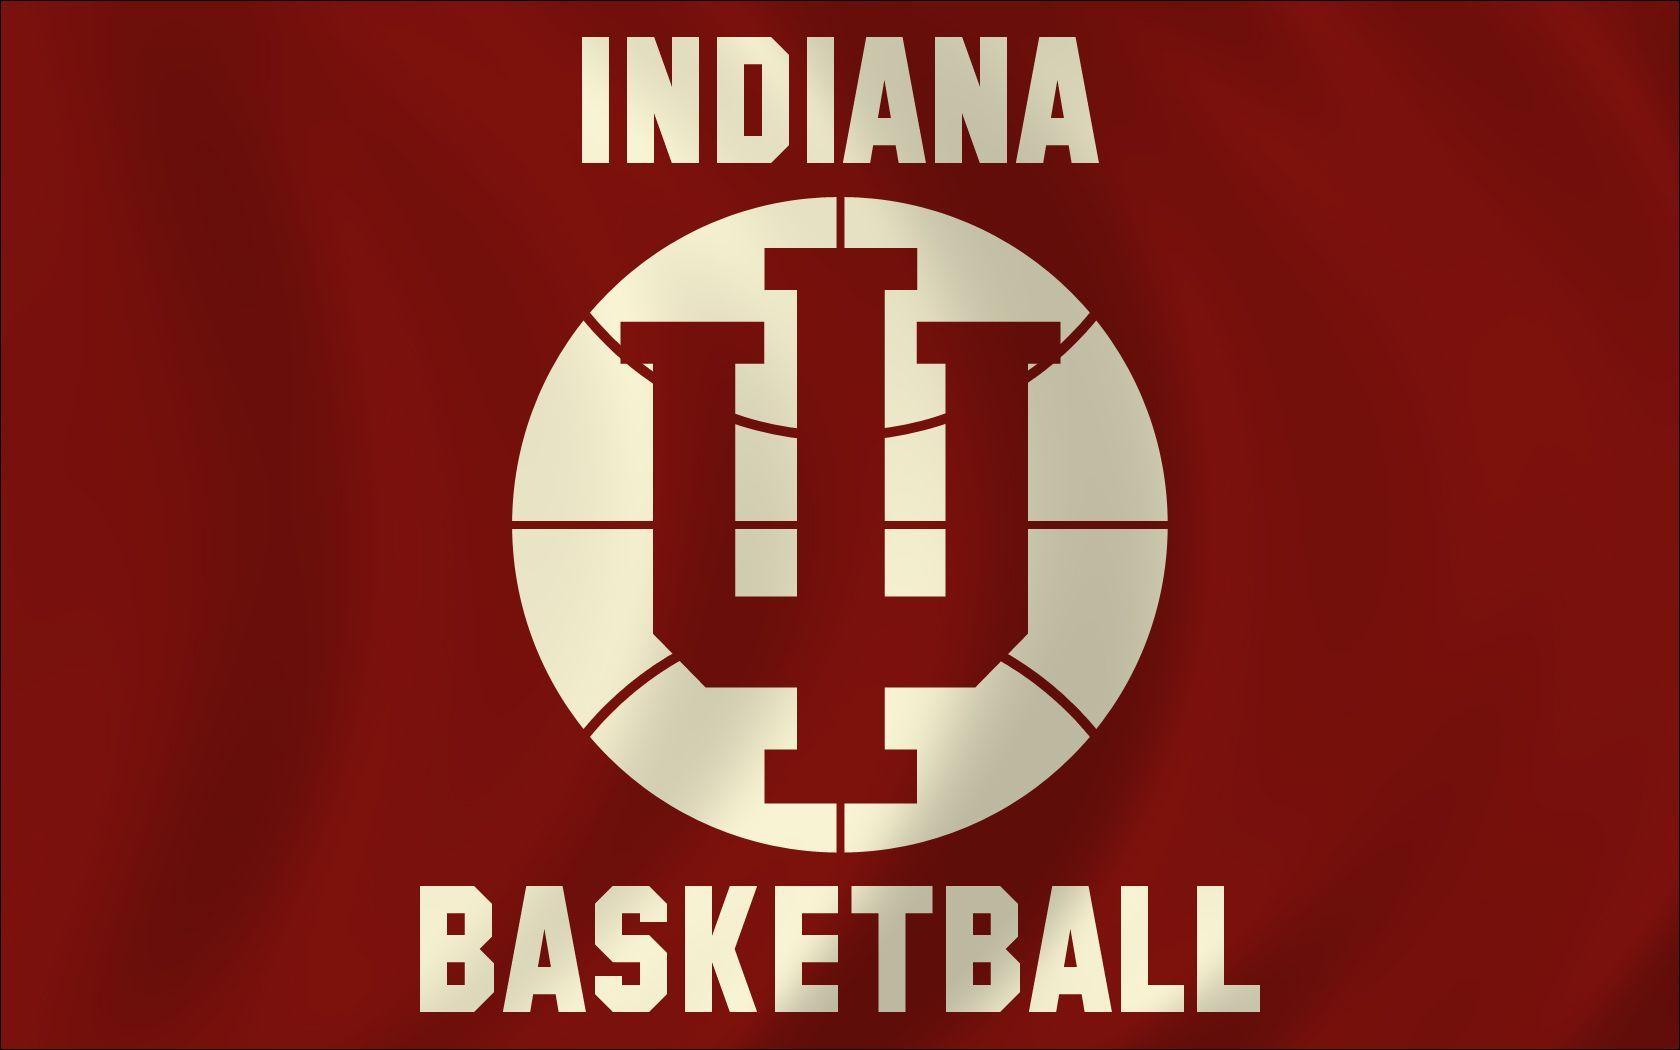 Indiana Basketball Logo - Indiana hoosiers basketball Logos